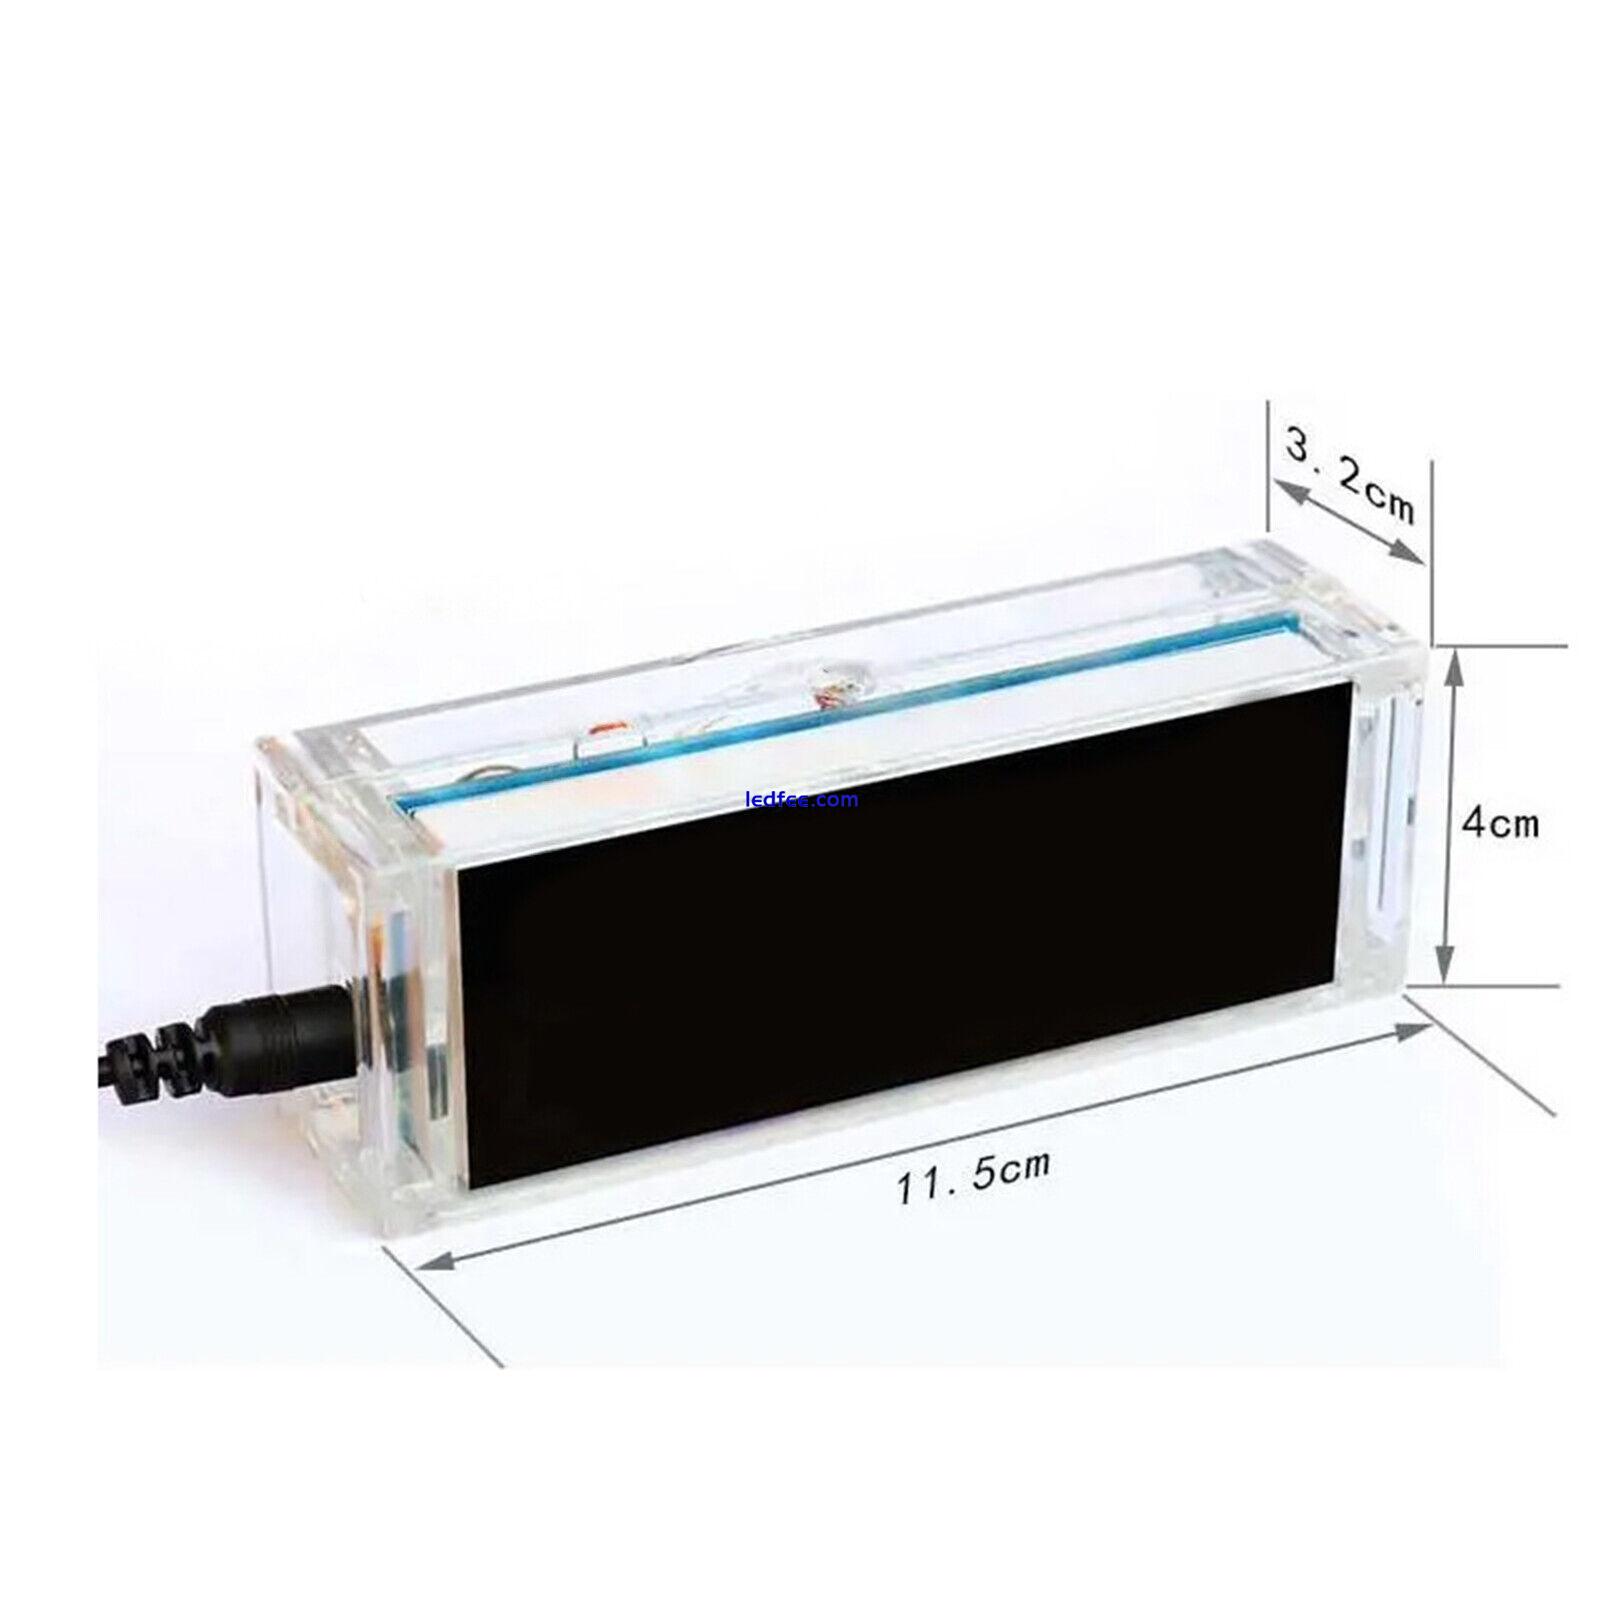 4-LED Digital Electronic Alarm Clock DIY Time Date Temperature and Light Control 2 